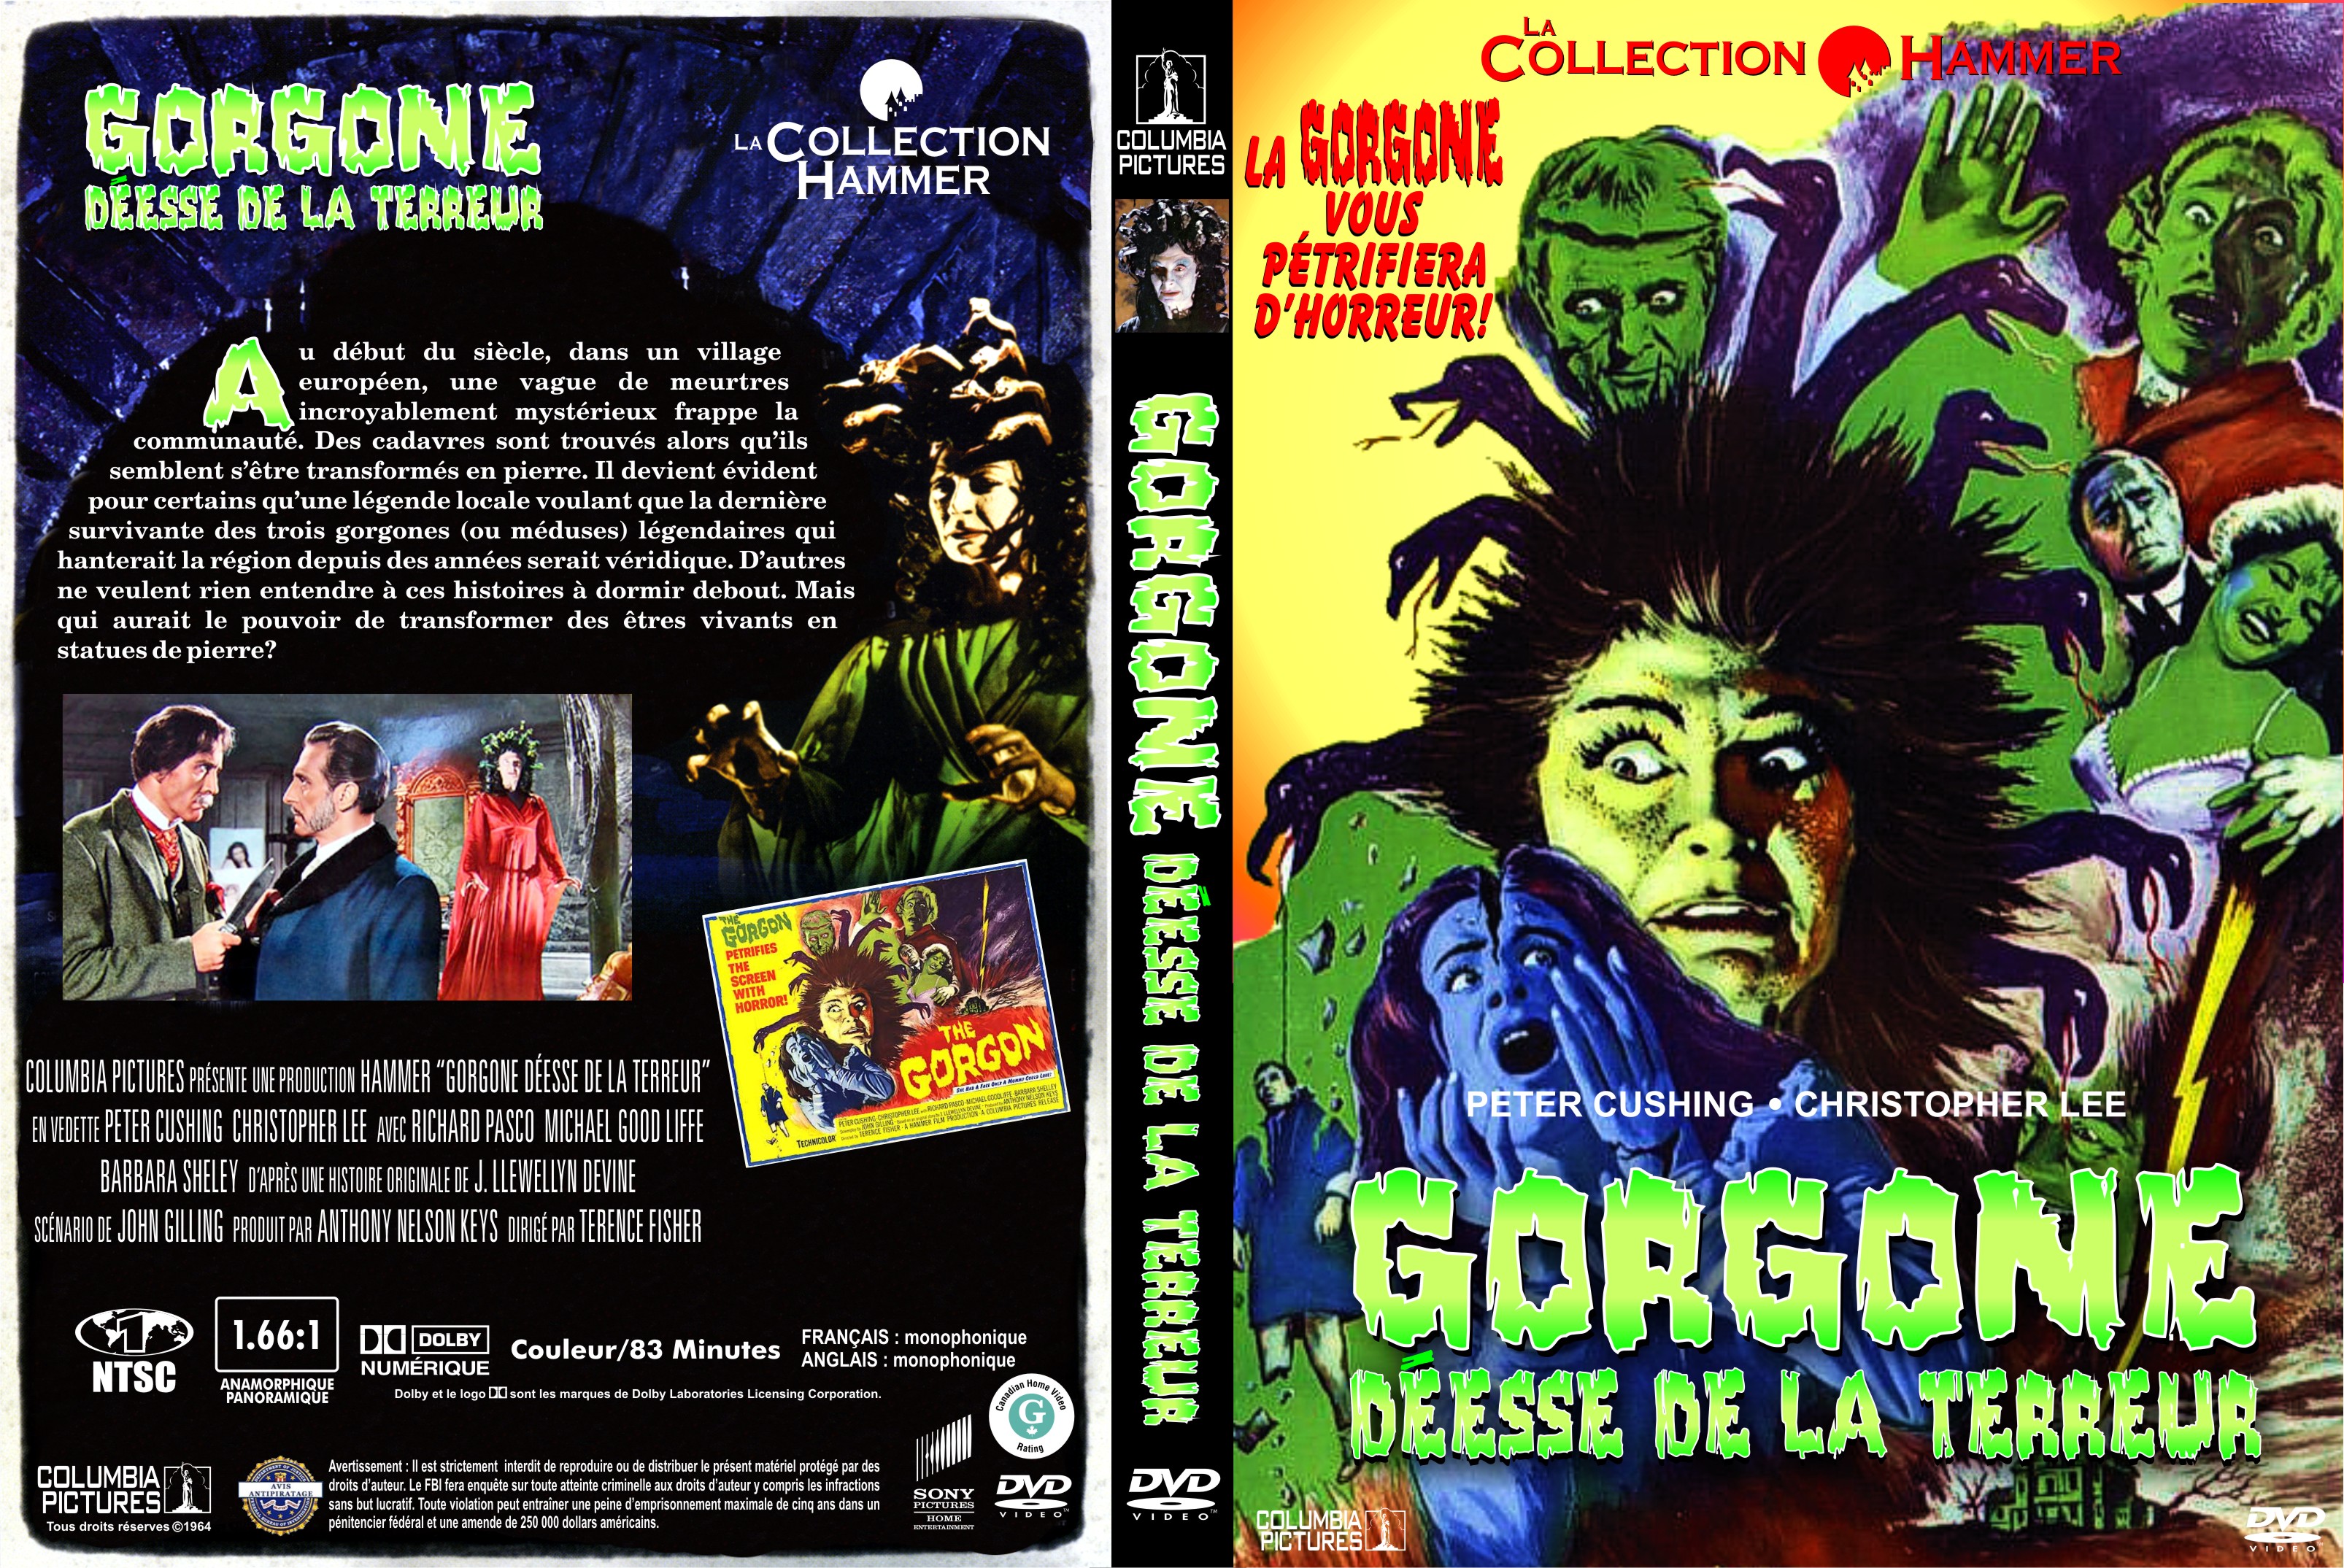 Jaquette DVD Gorgone Desse de la terreur custom